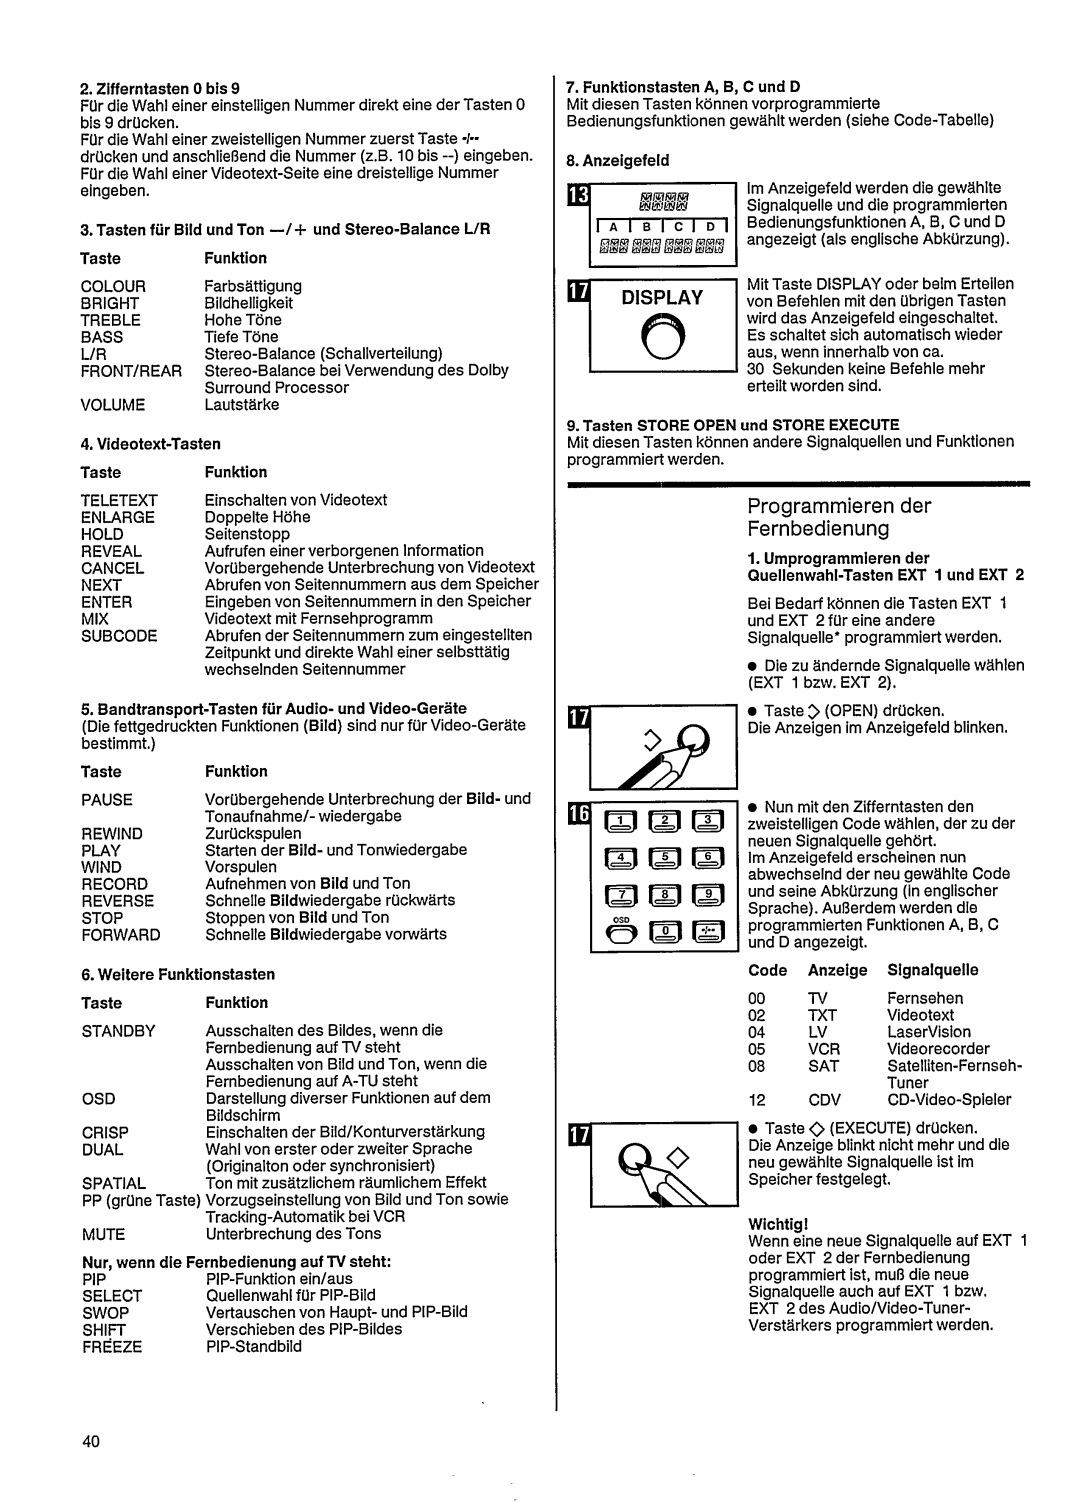 Philips 27ce7695 manual 